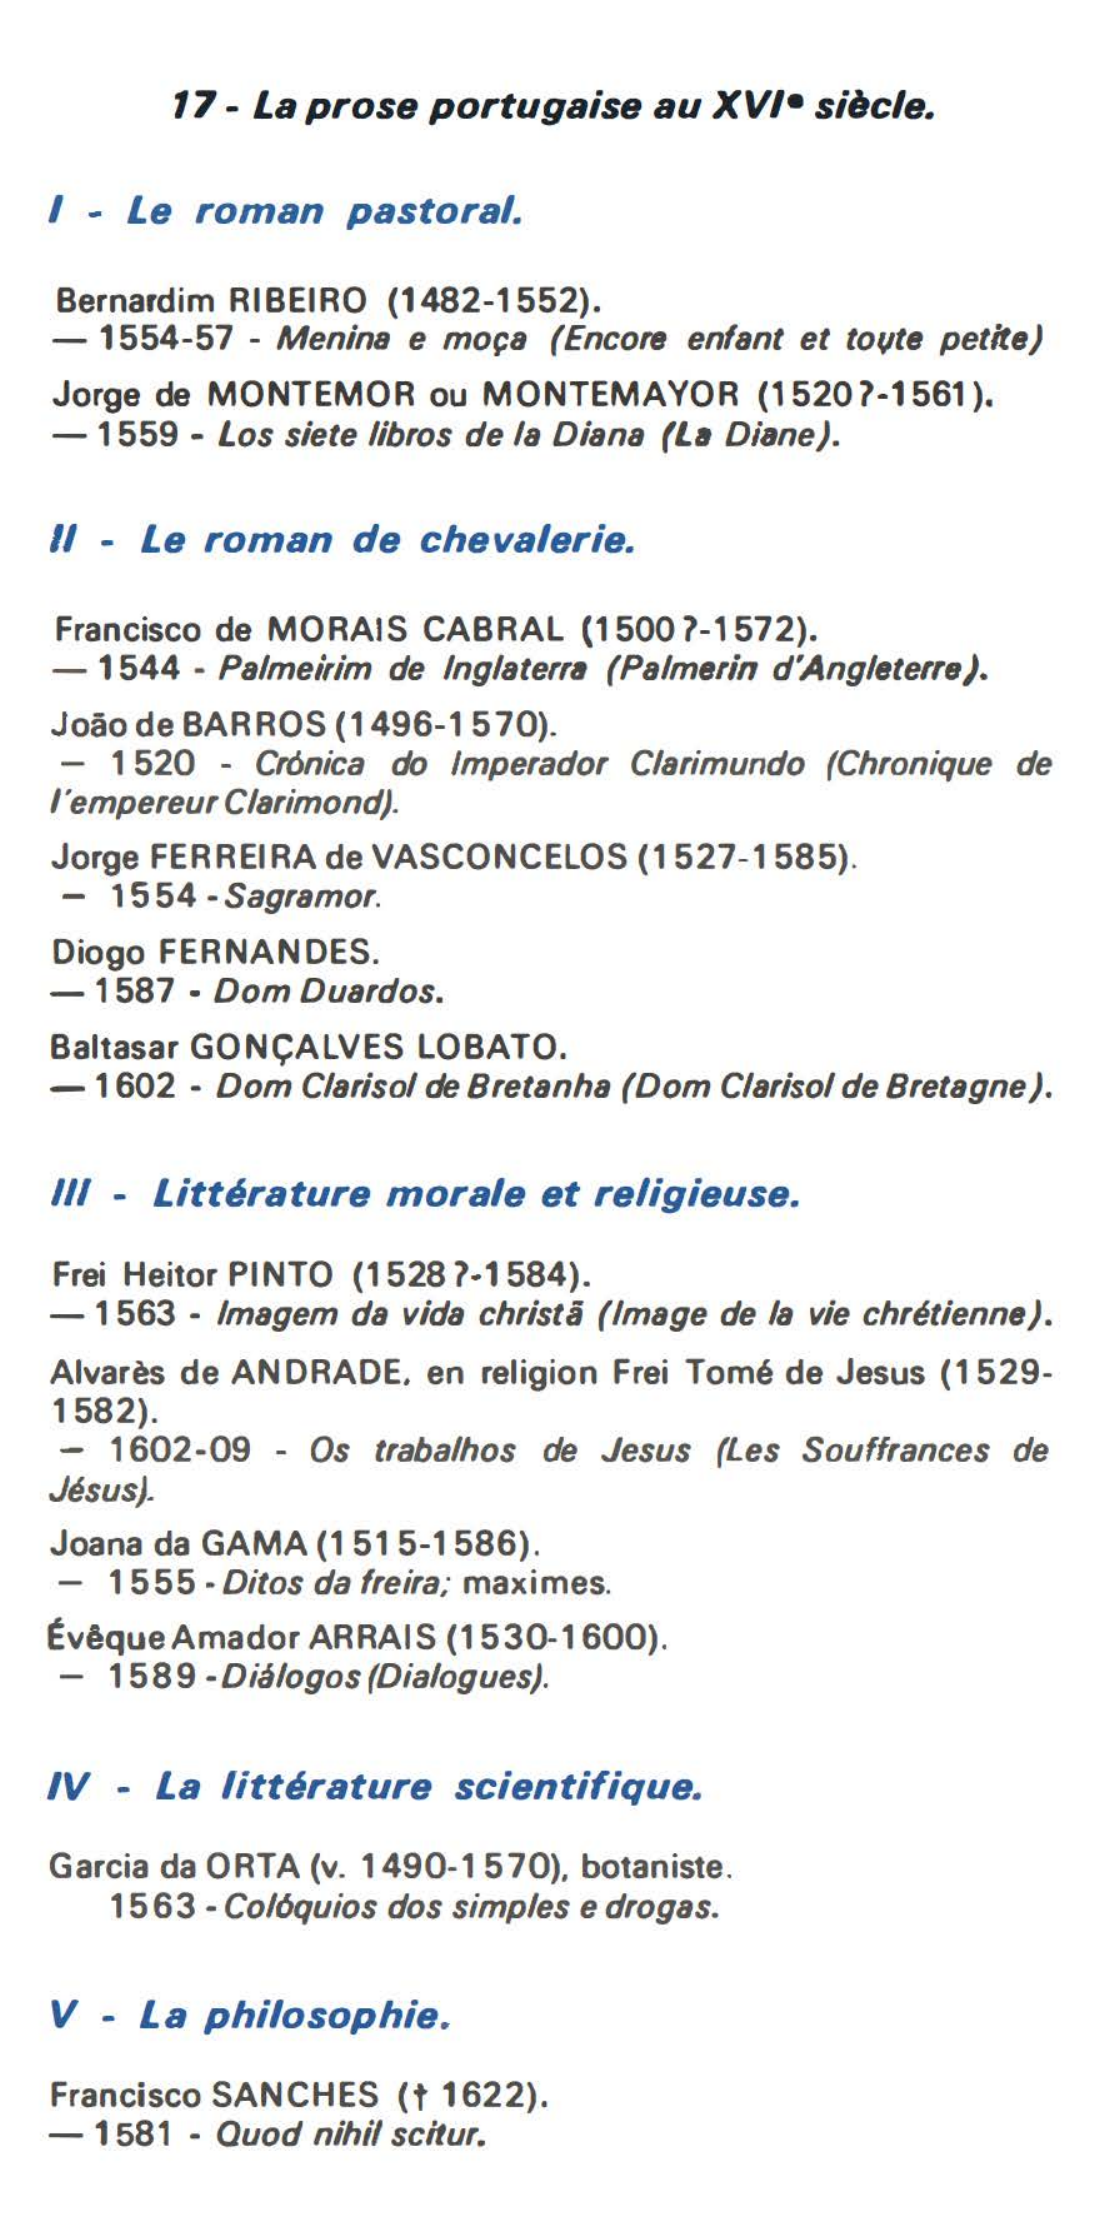 Prévisualisation du document 17 - La prose portugaise au XVI• siècle.

I - Le roman pastoral.
Bernardim RIBEIRO (1482-1552).
- 1554-57 - Menins...